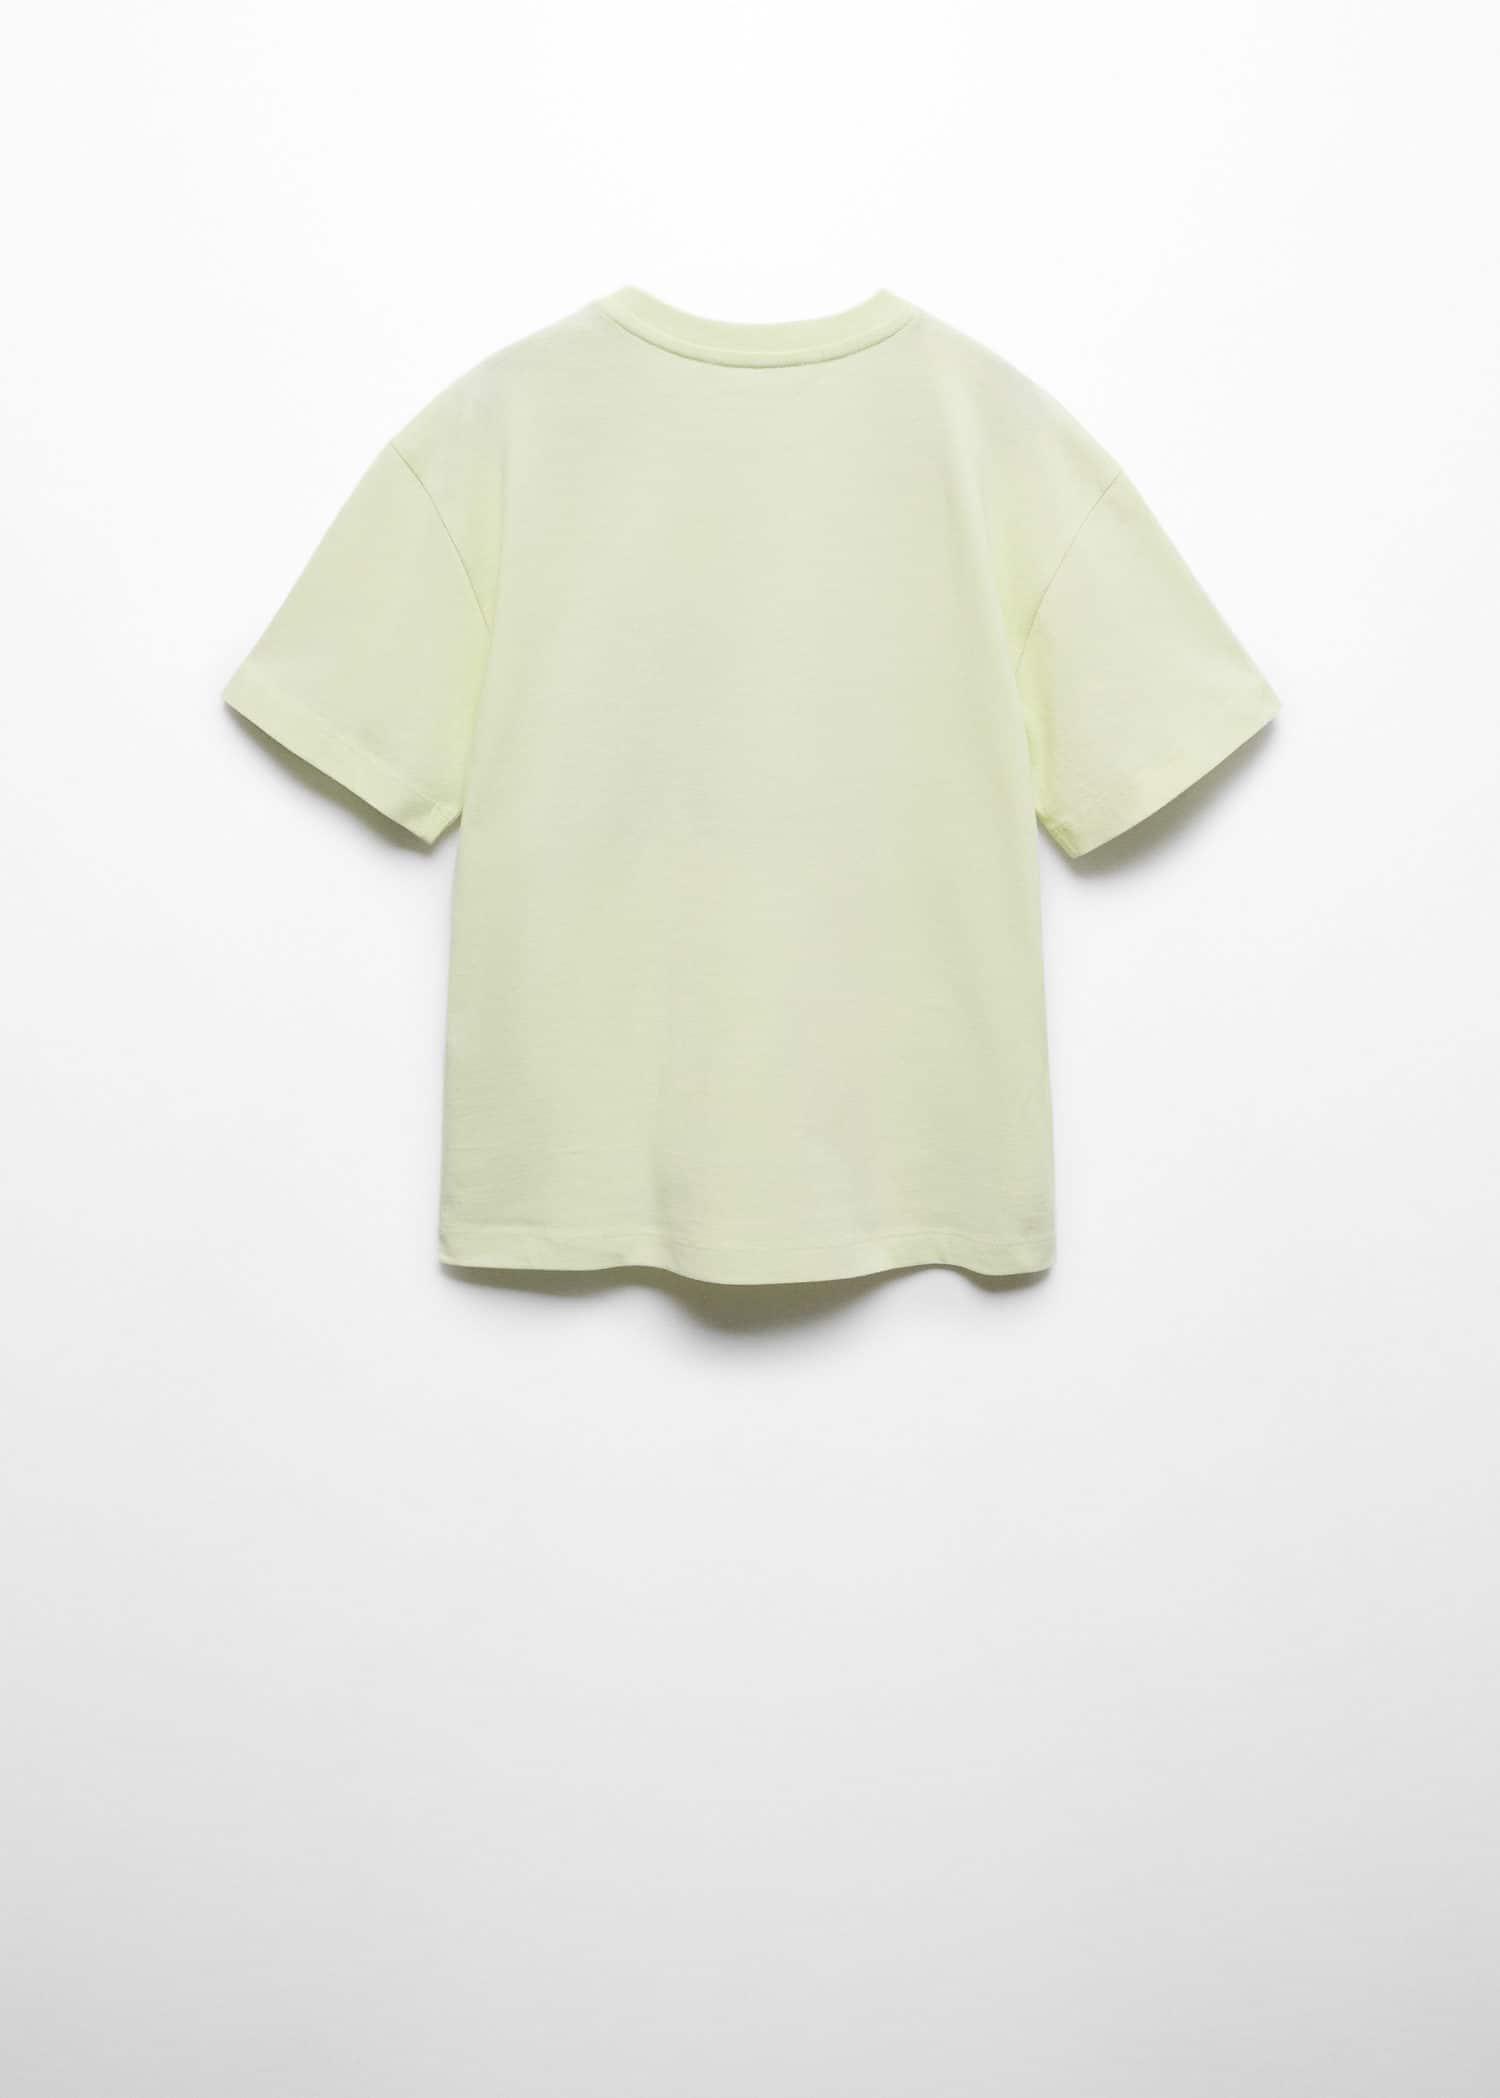 Mango - Yellow Printed Cotton-Blend T-Shirt, Kids Boy